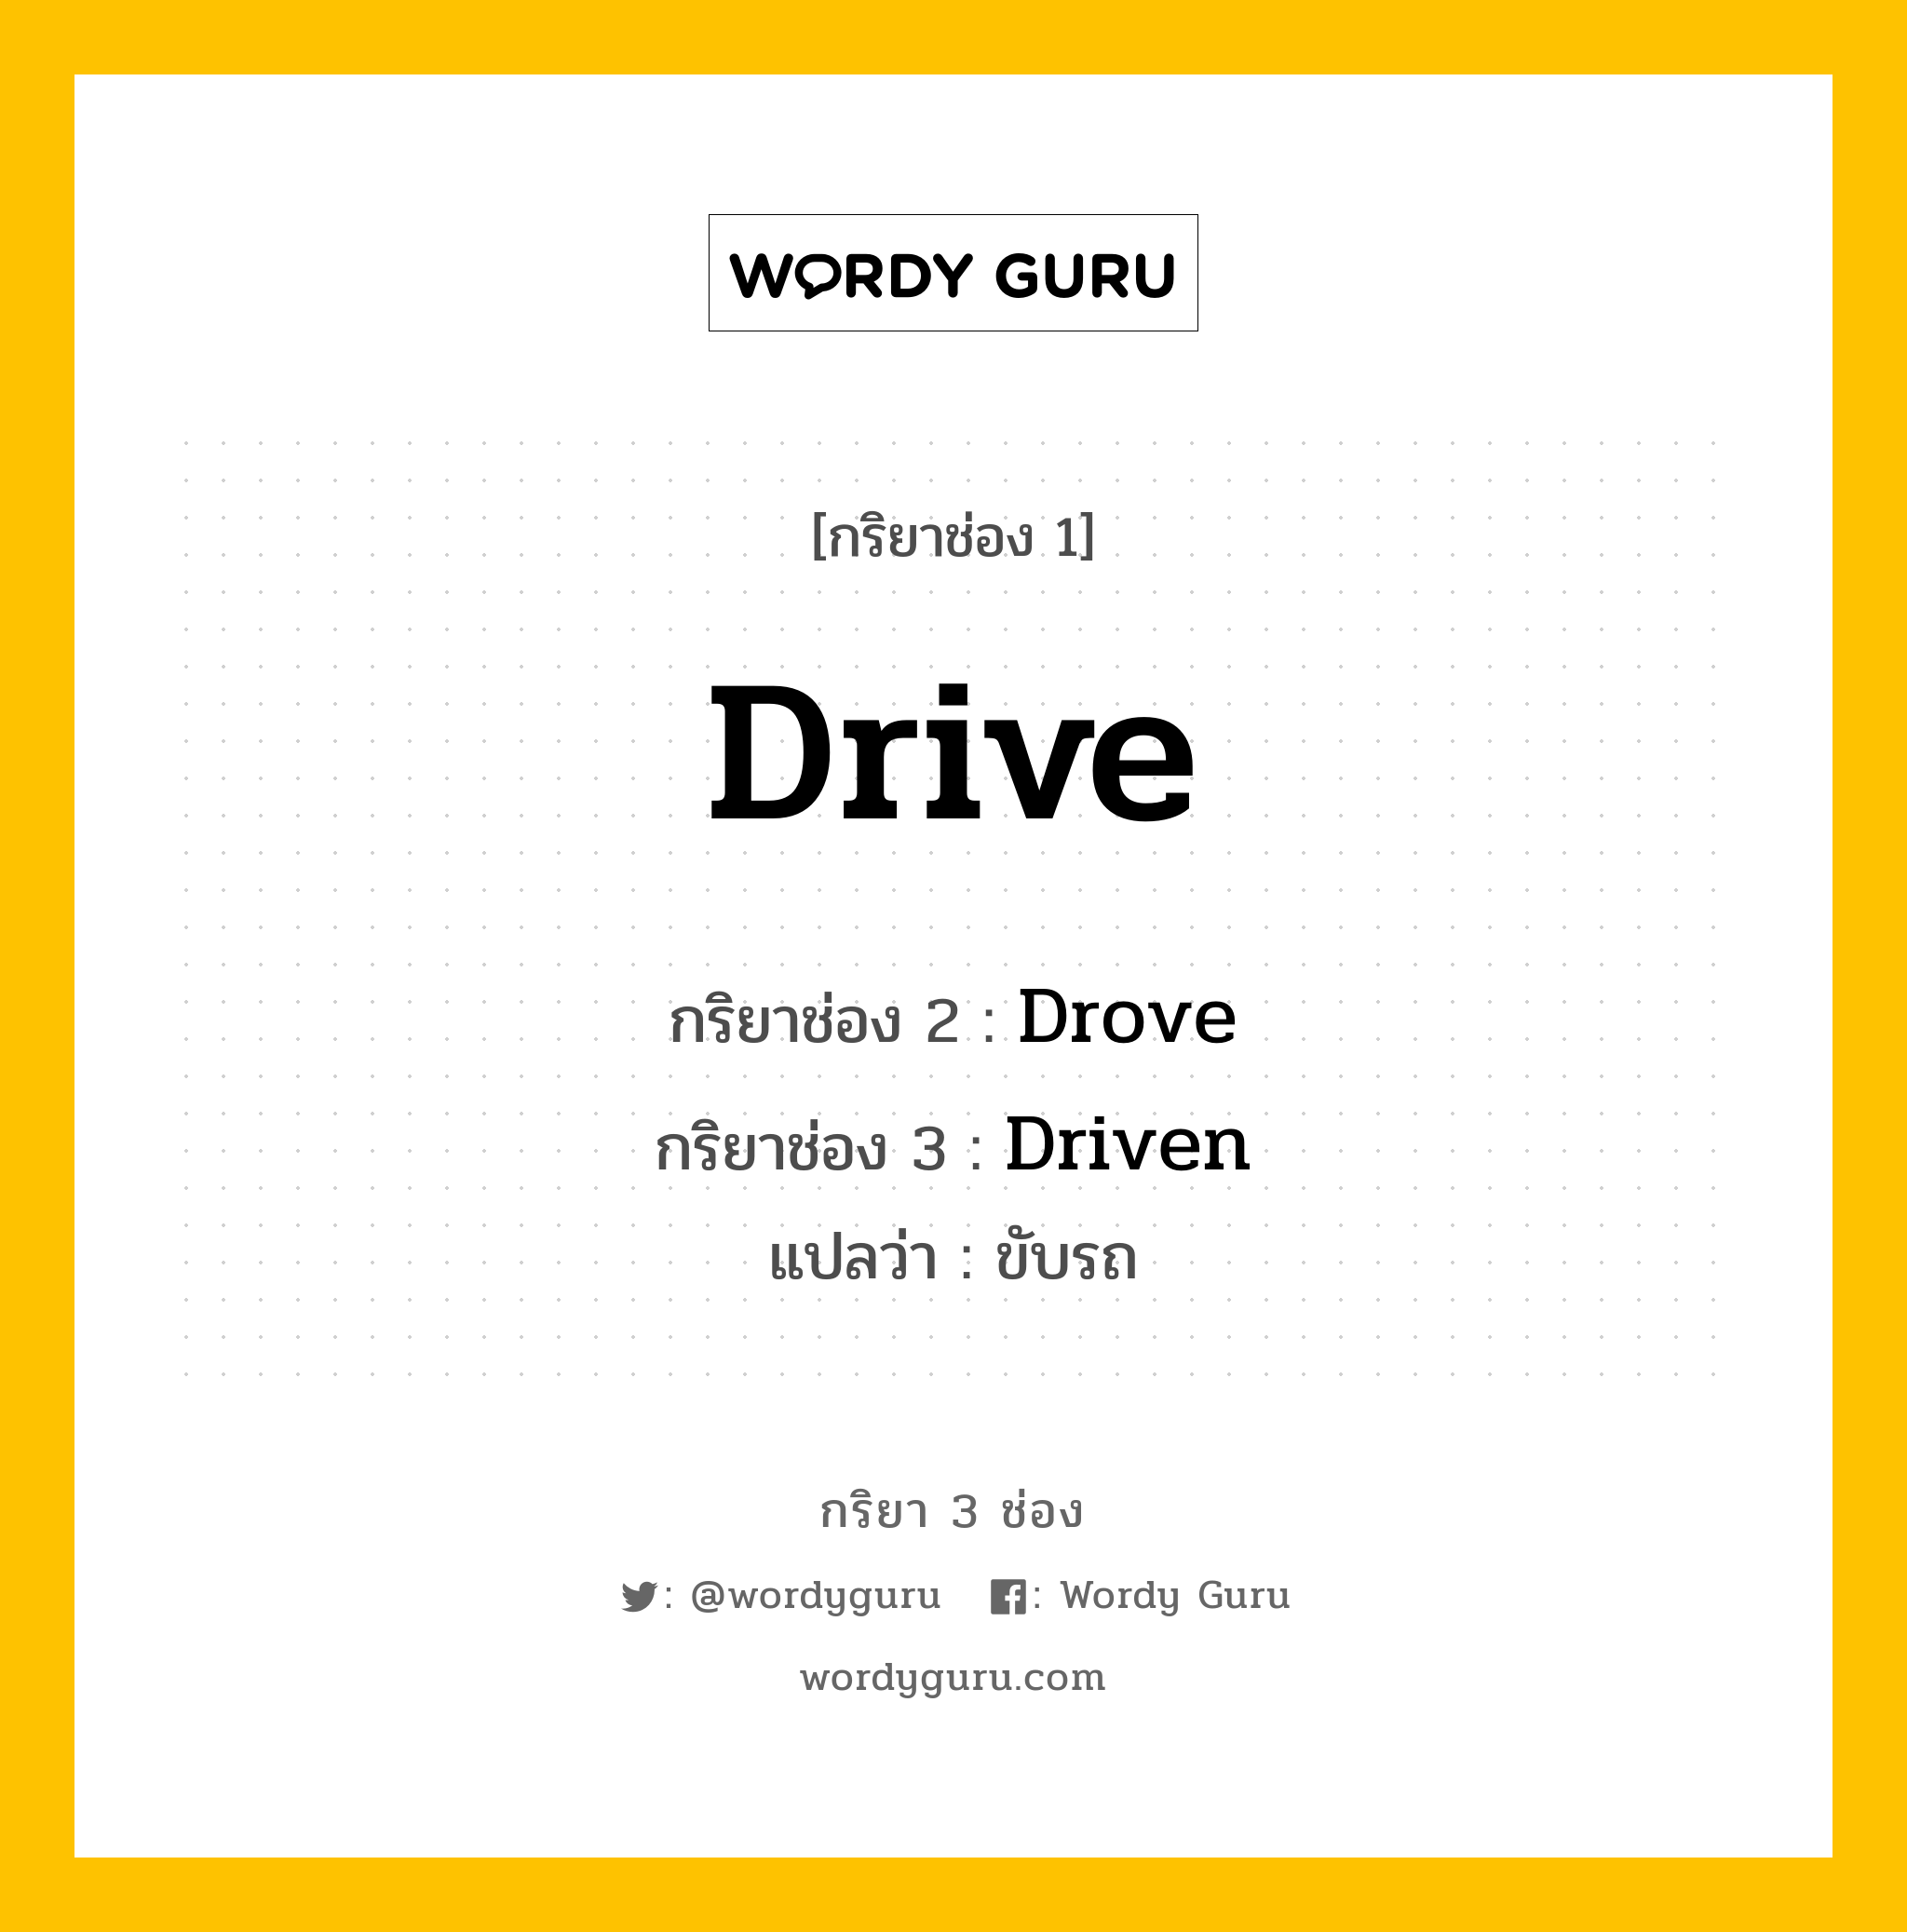 Drive มีกริยา 3 ช่องอะไรบ้าง? คำศัพท์ในกลุ่มประเภท Irregular Verb, กริยาช่อง 1 Drive กริยาช่อง 2 Drove กริยาช่อง 3 Driven แปลว่า ขับรถ หมวด Irregular Verb